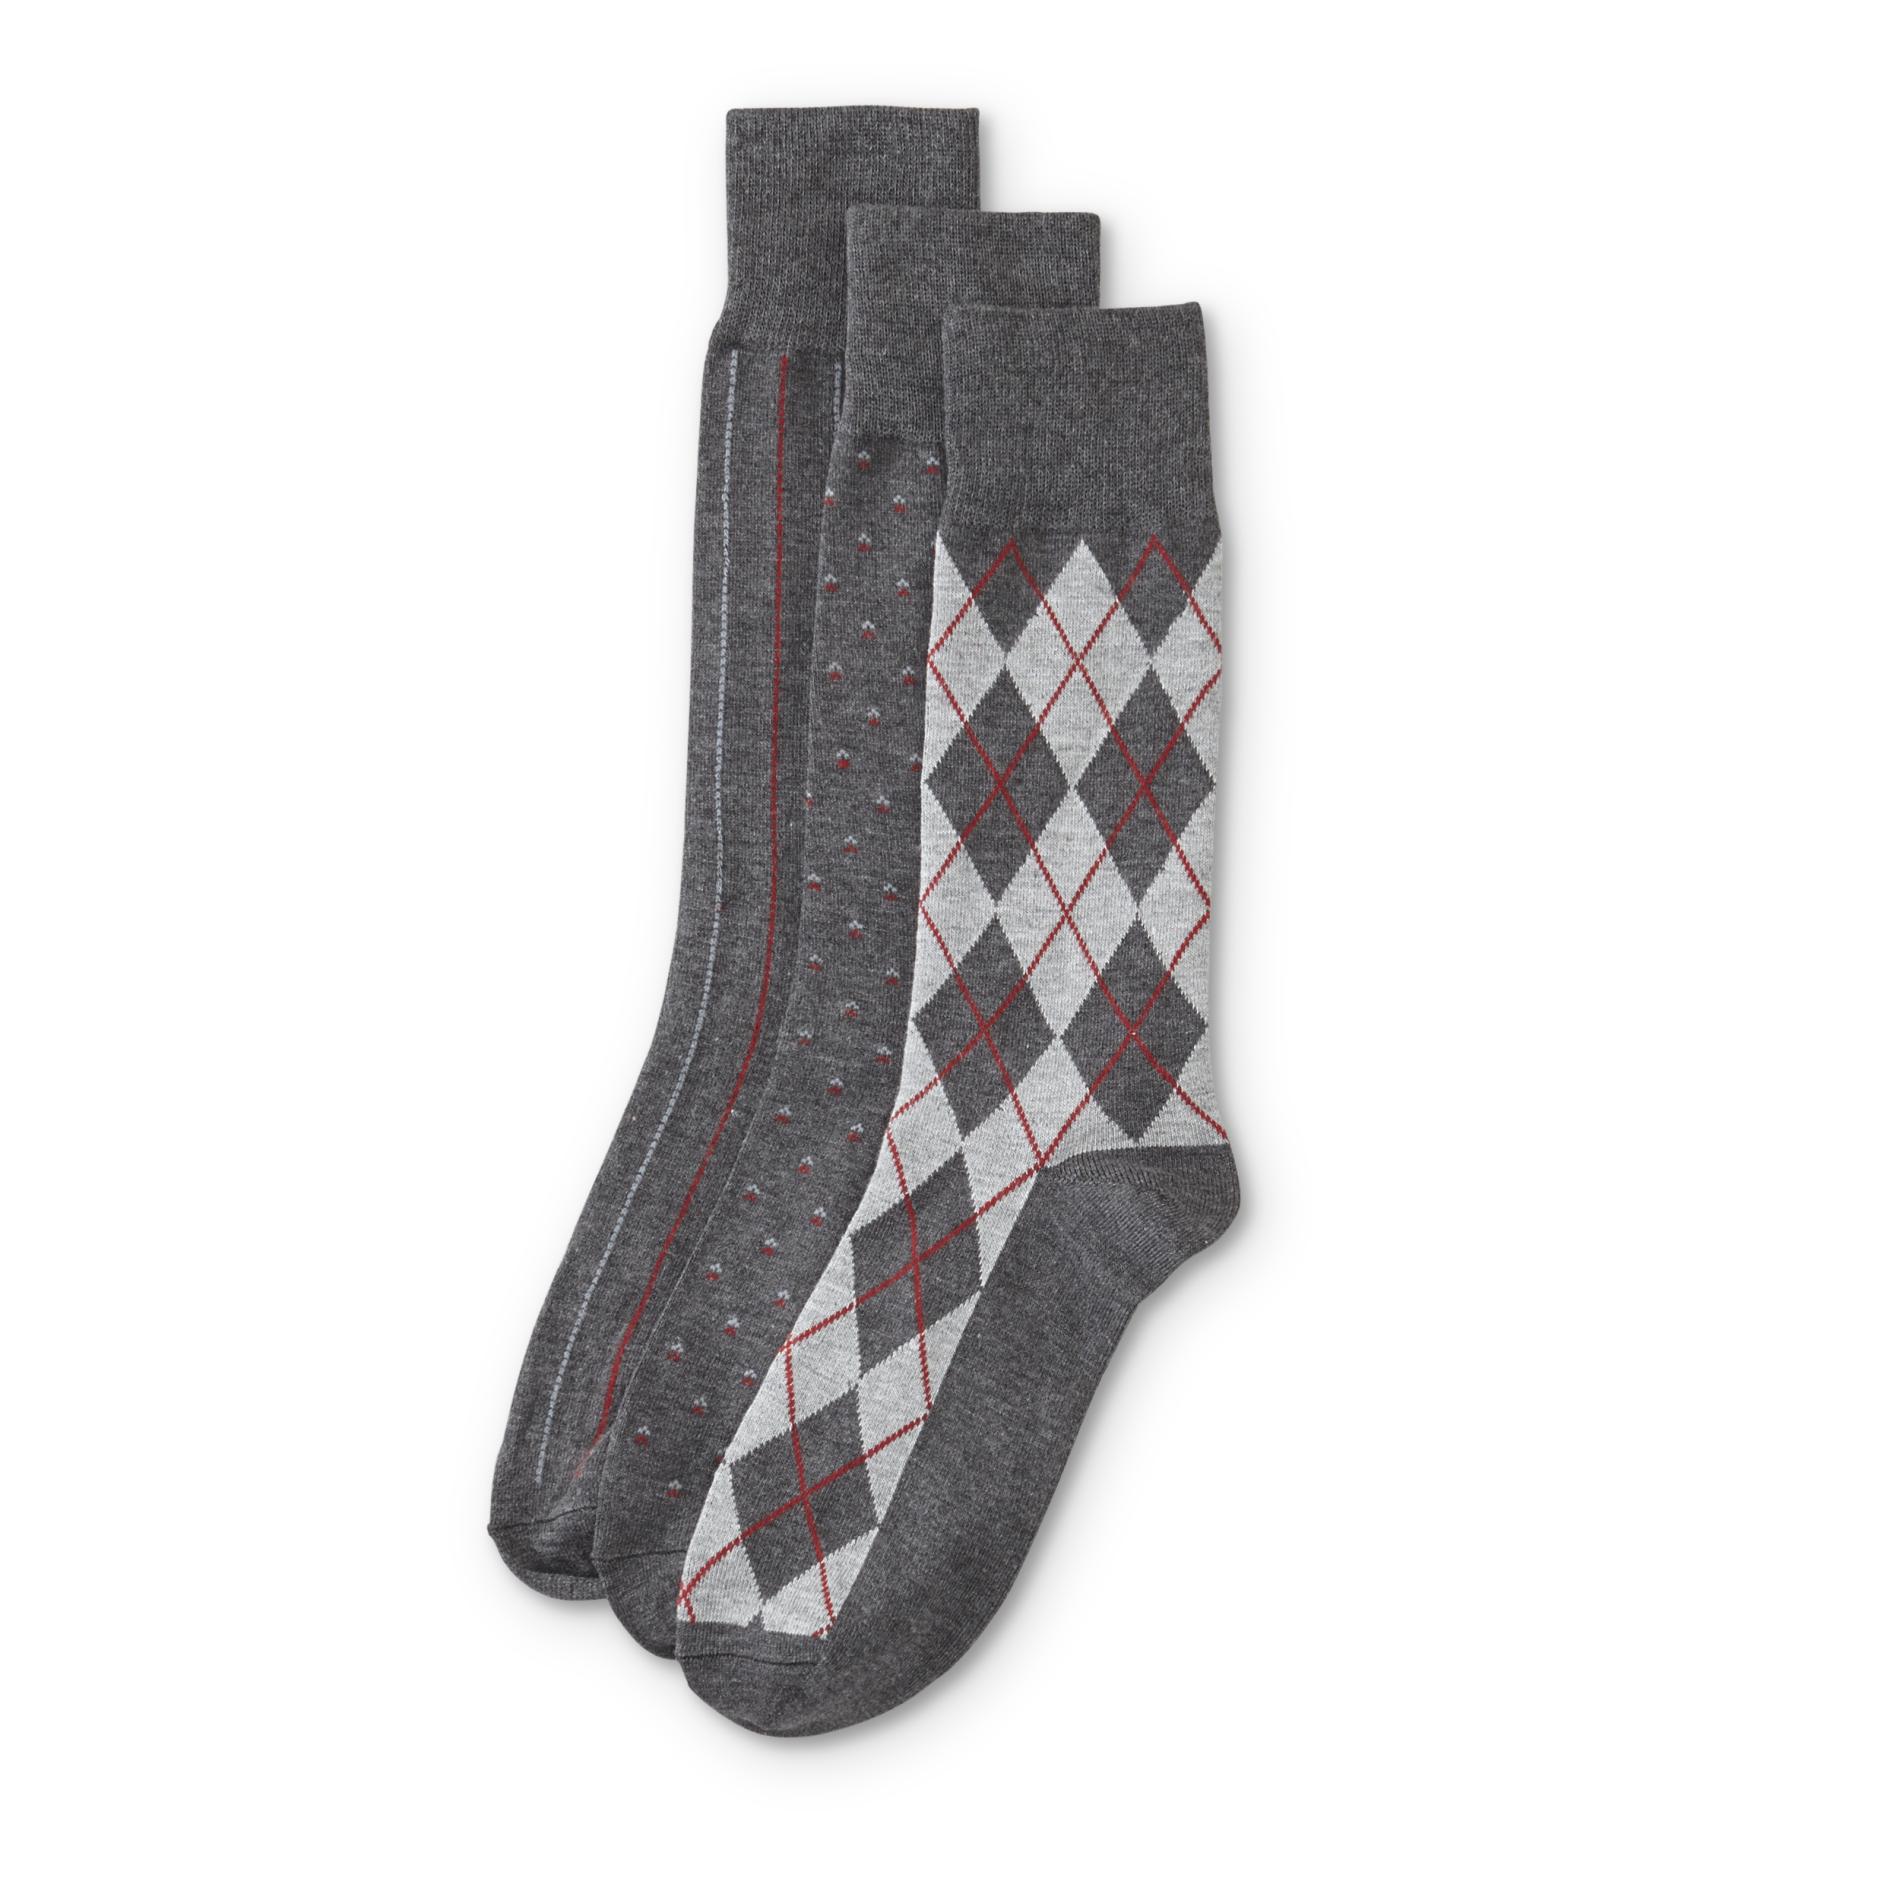 Basic Editions Men's 3-Pairs Crew Socks - Striped & Argyle